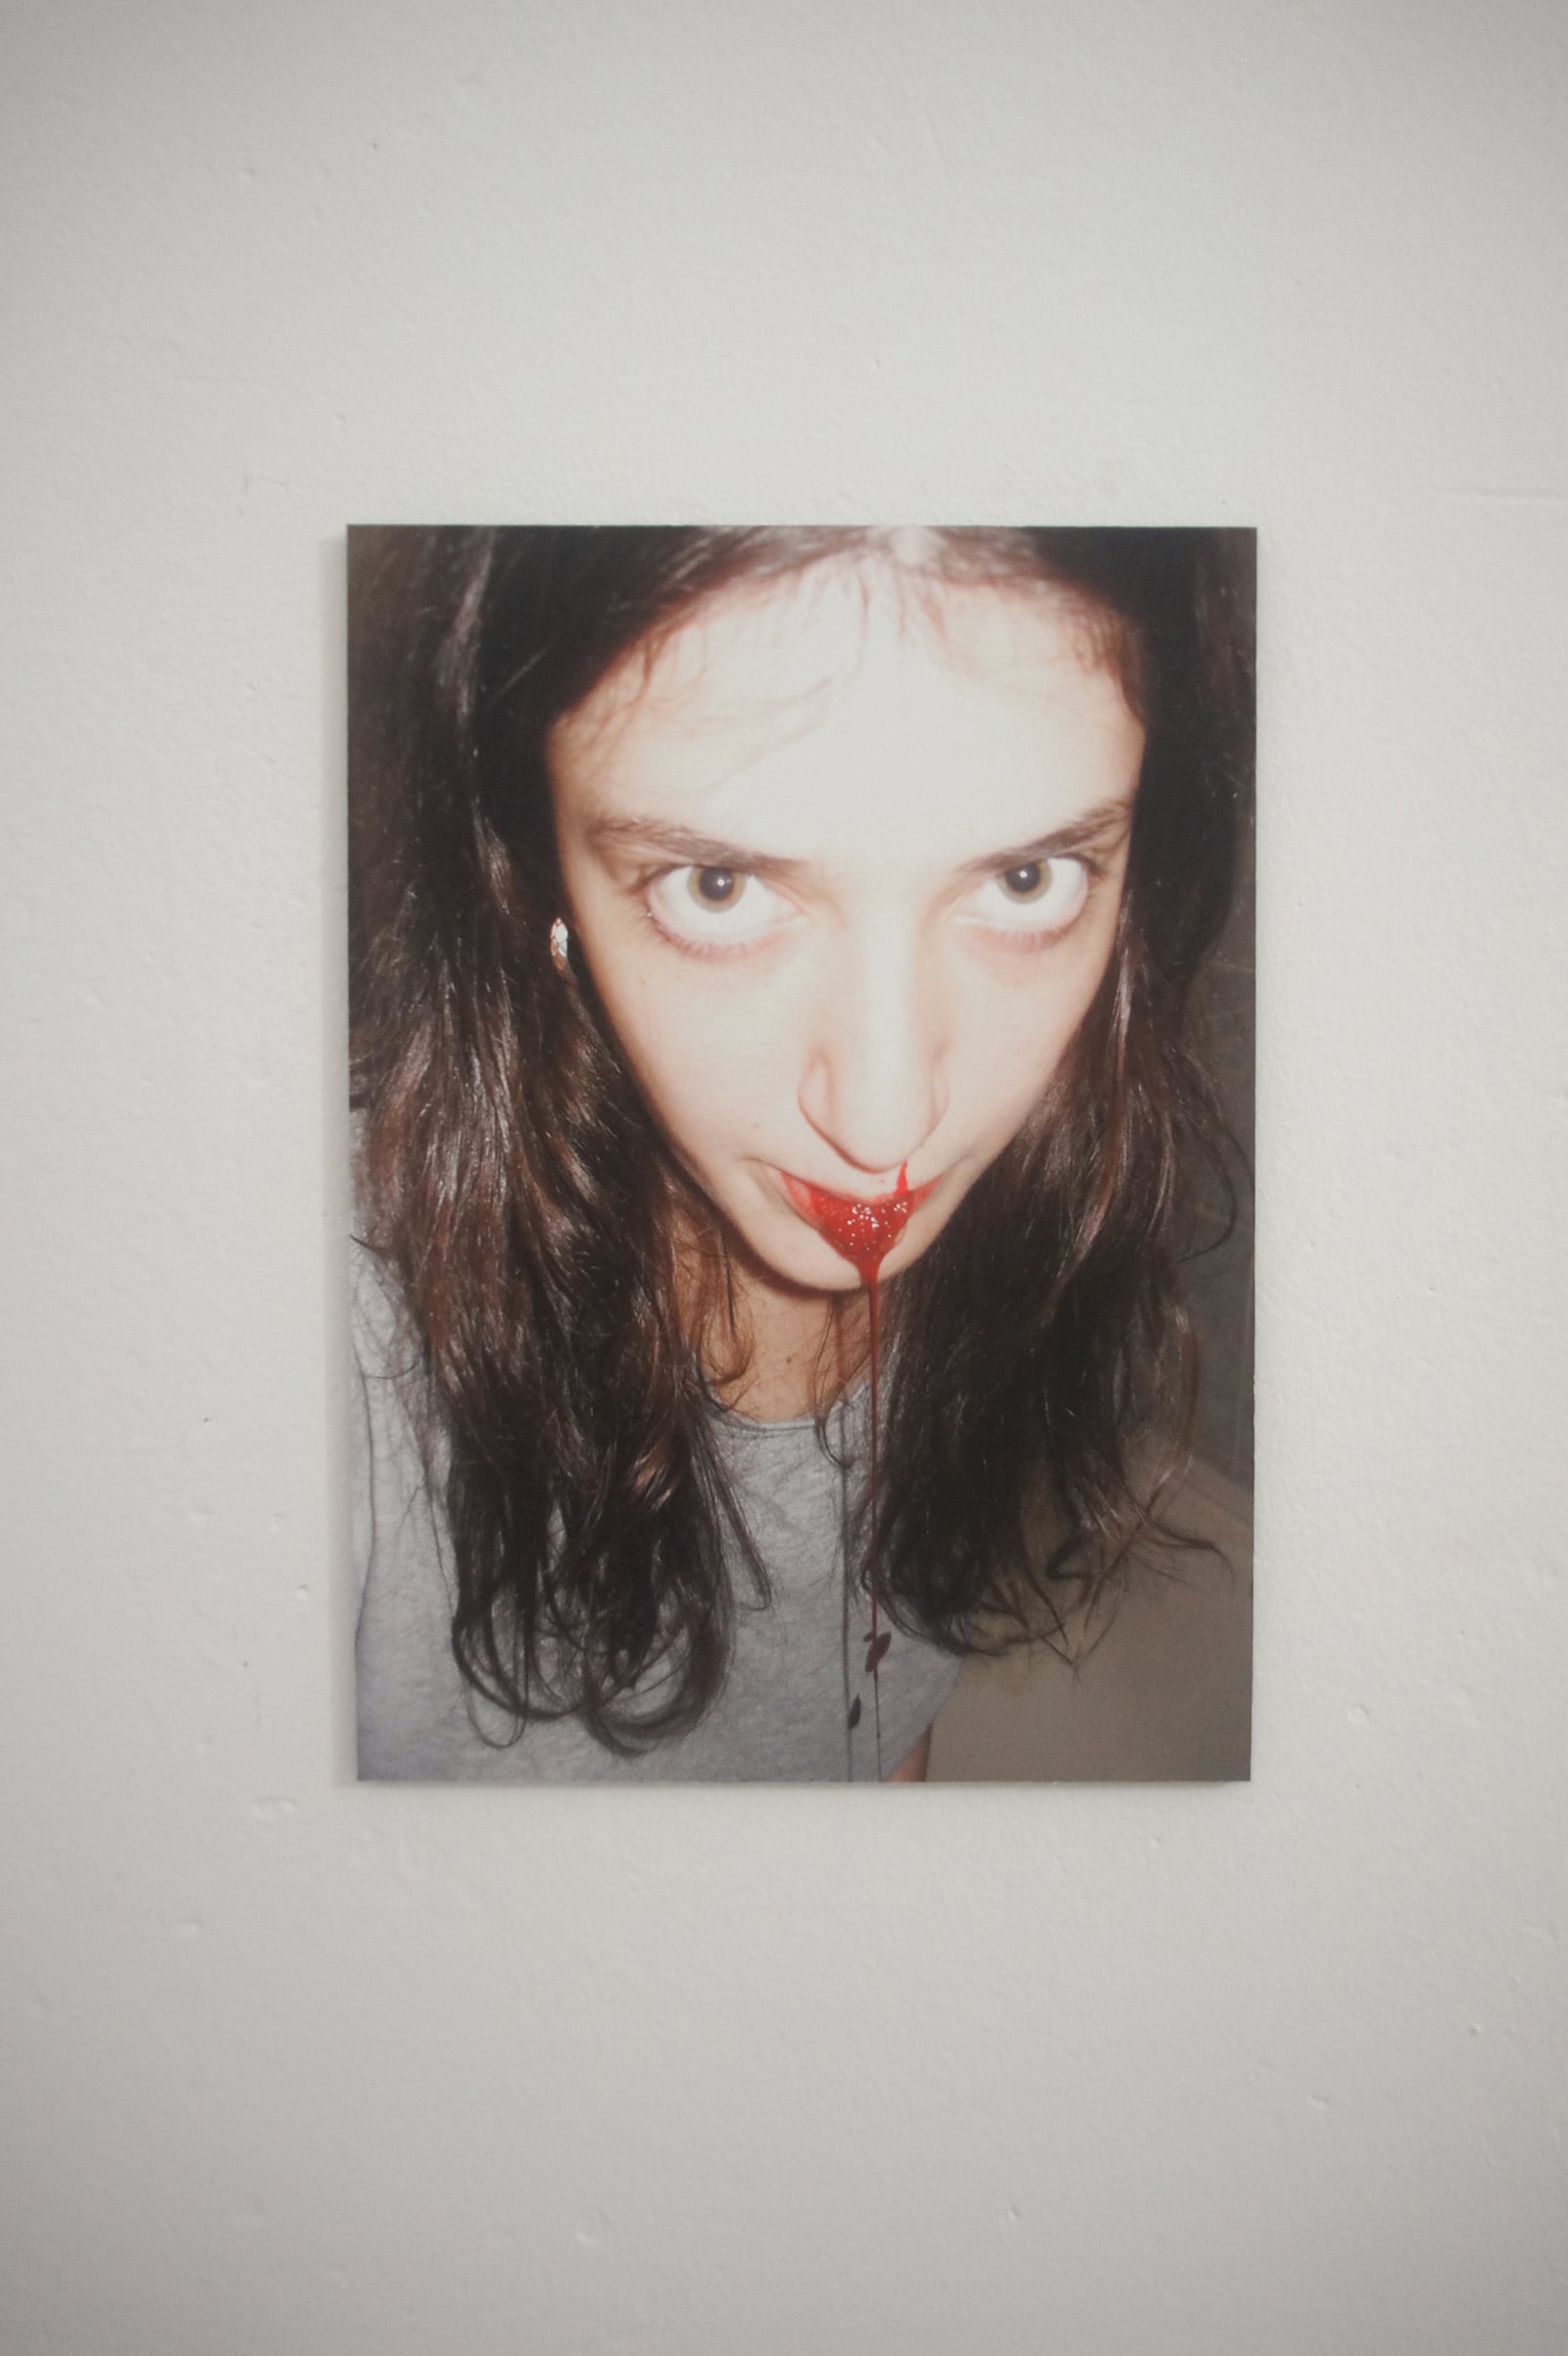 Karina Azizova, fire rat 1996 forever 2, 2019, matte print on aluminum dibond, 18 x 25 cm